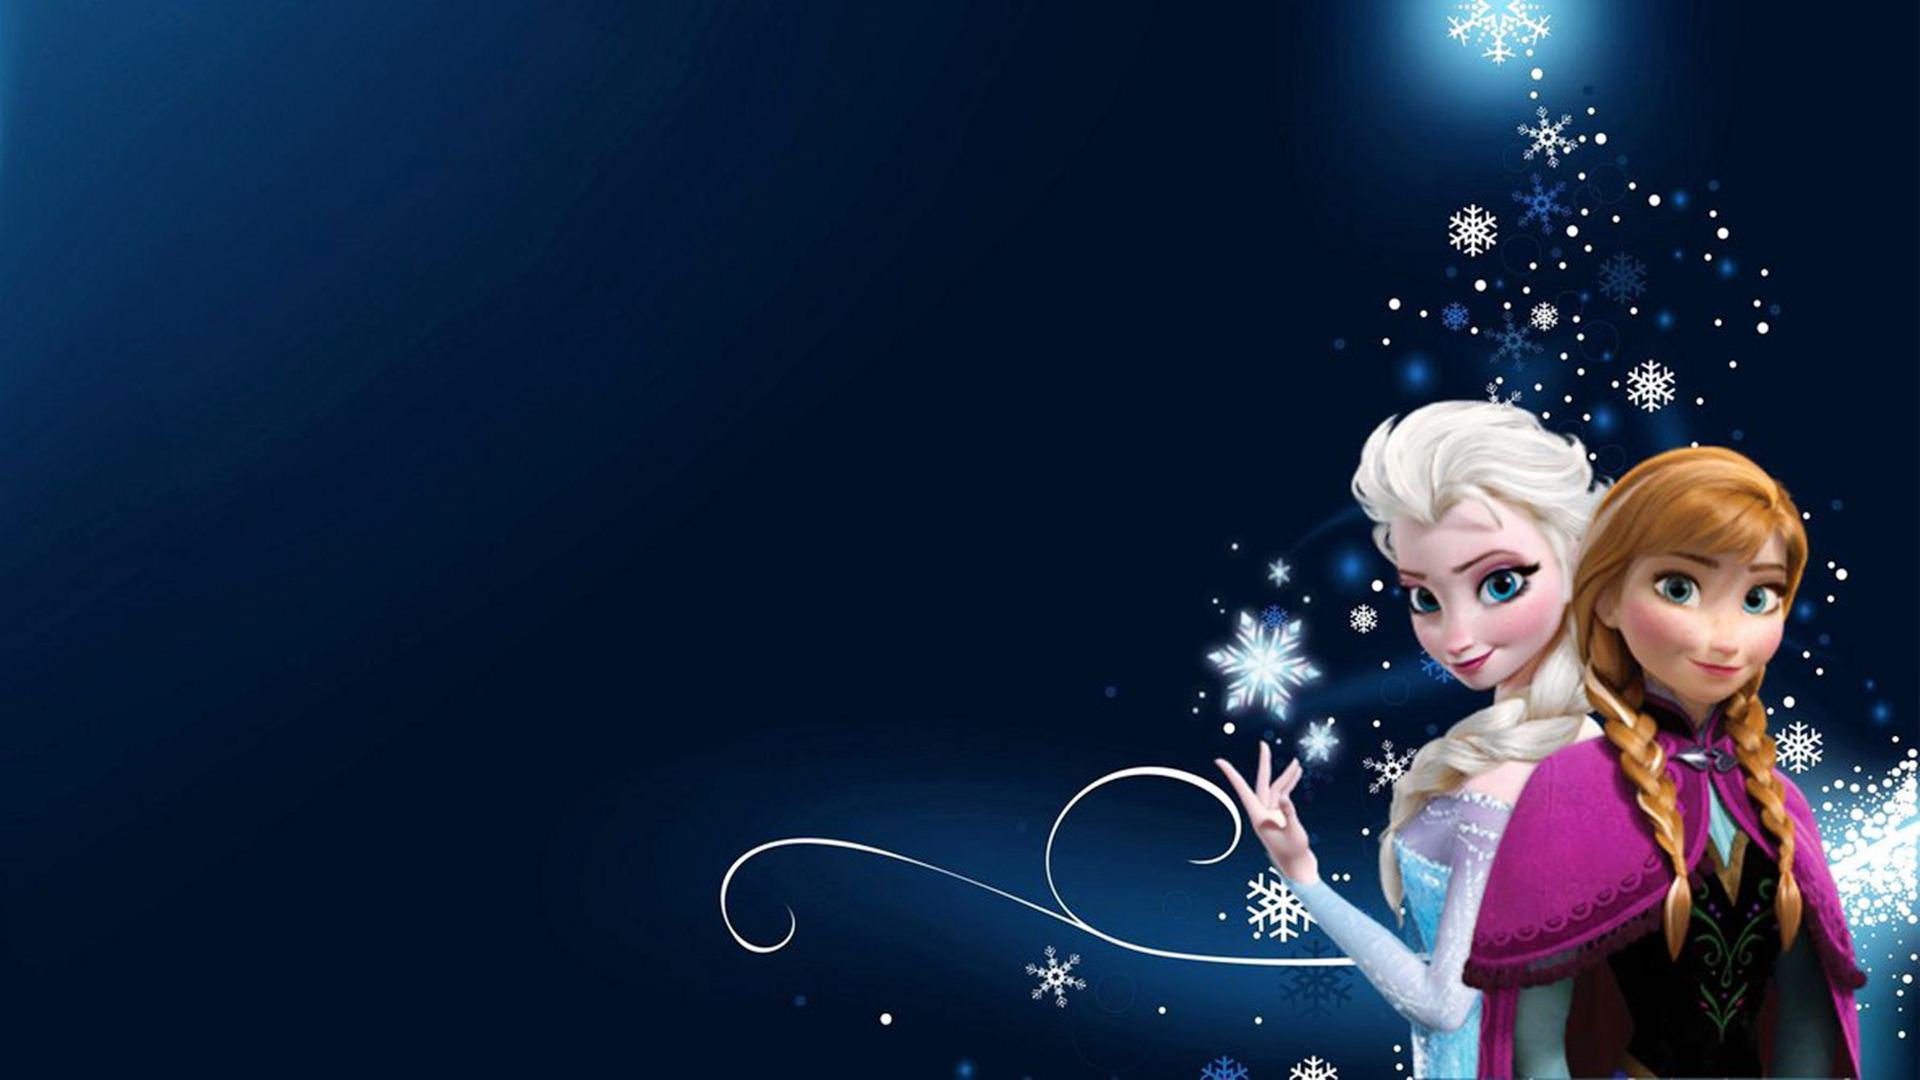 Elsa Frozen Wallpapers HD | Wallpapers, Backgrounds, Images, Art ...